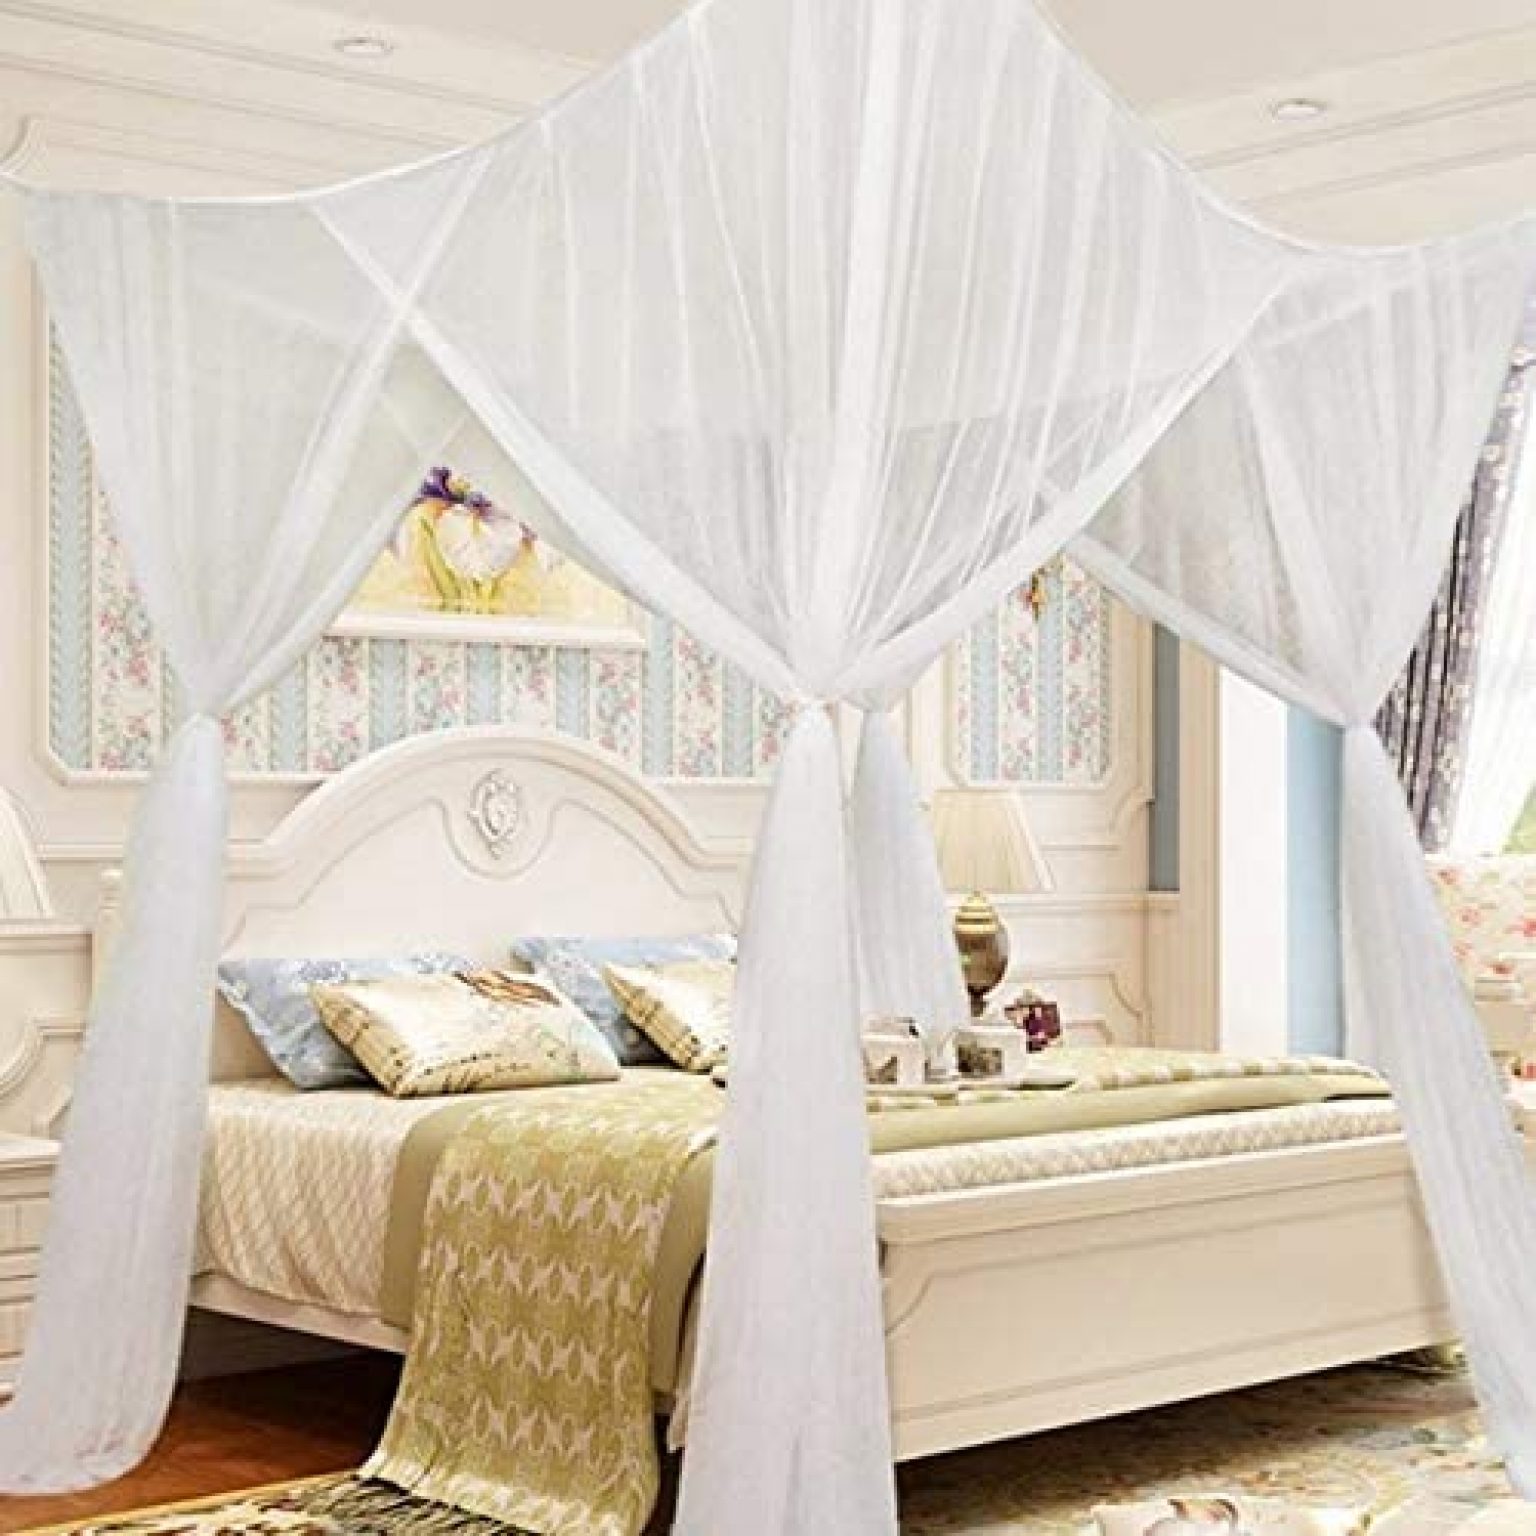 Bed Curtains Dubai, Abu Dhabi & UAE - Buy Best Bed Curtains Online